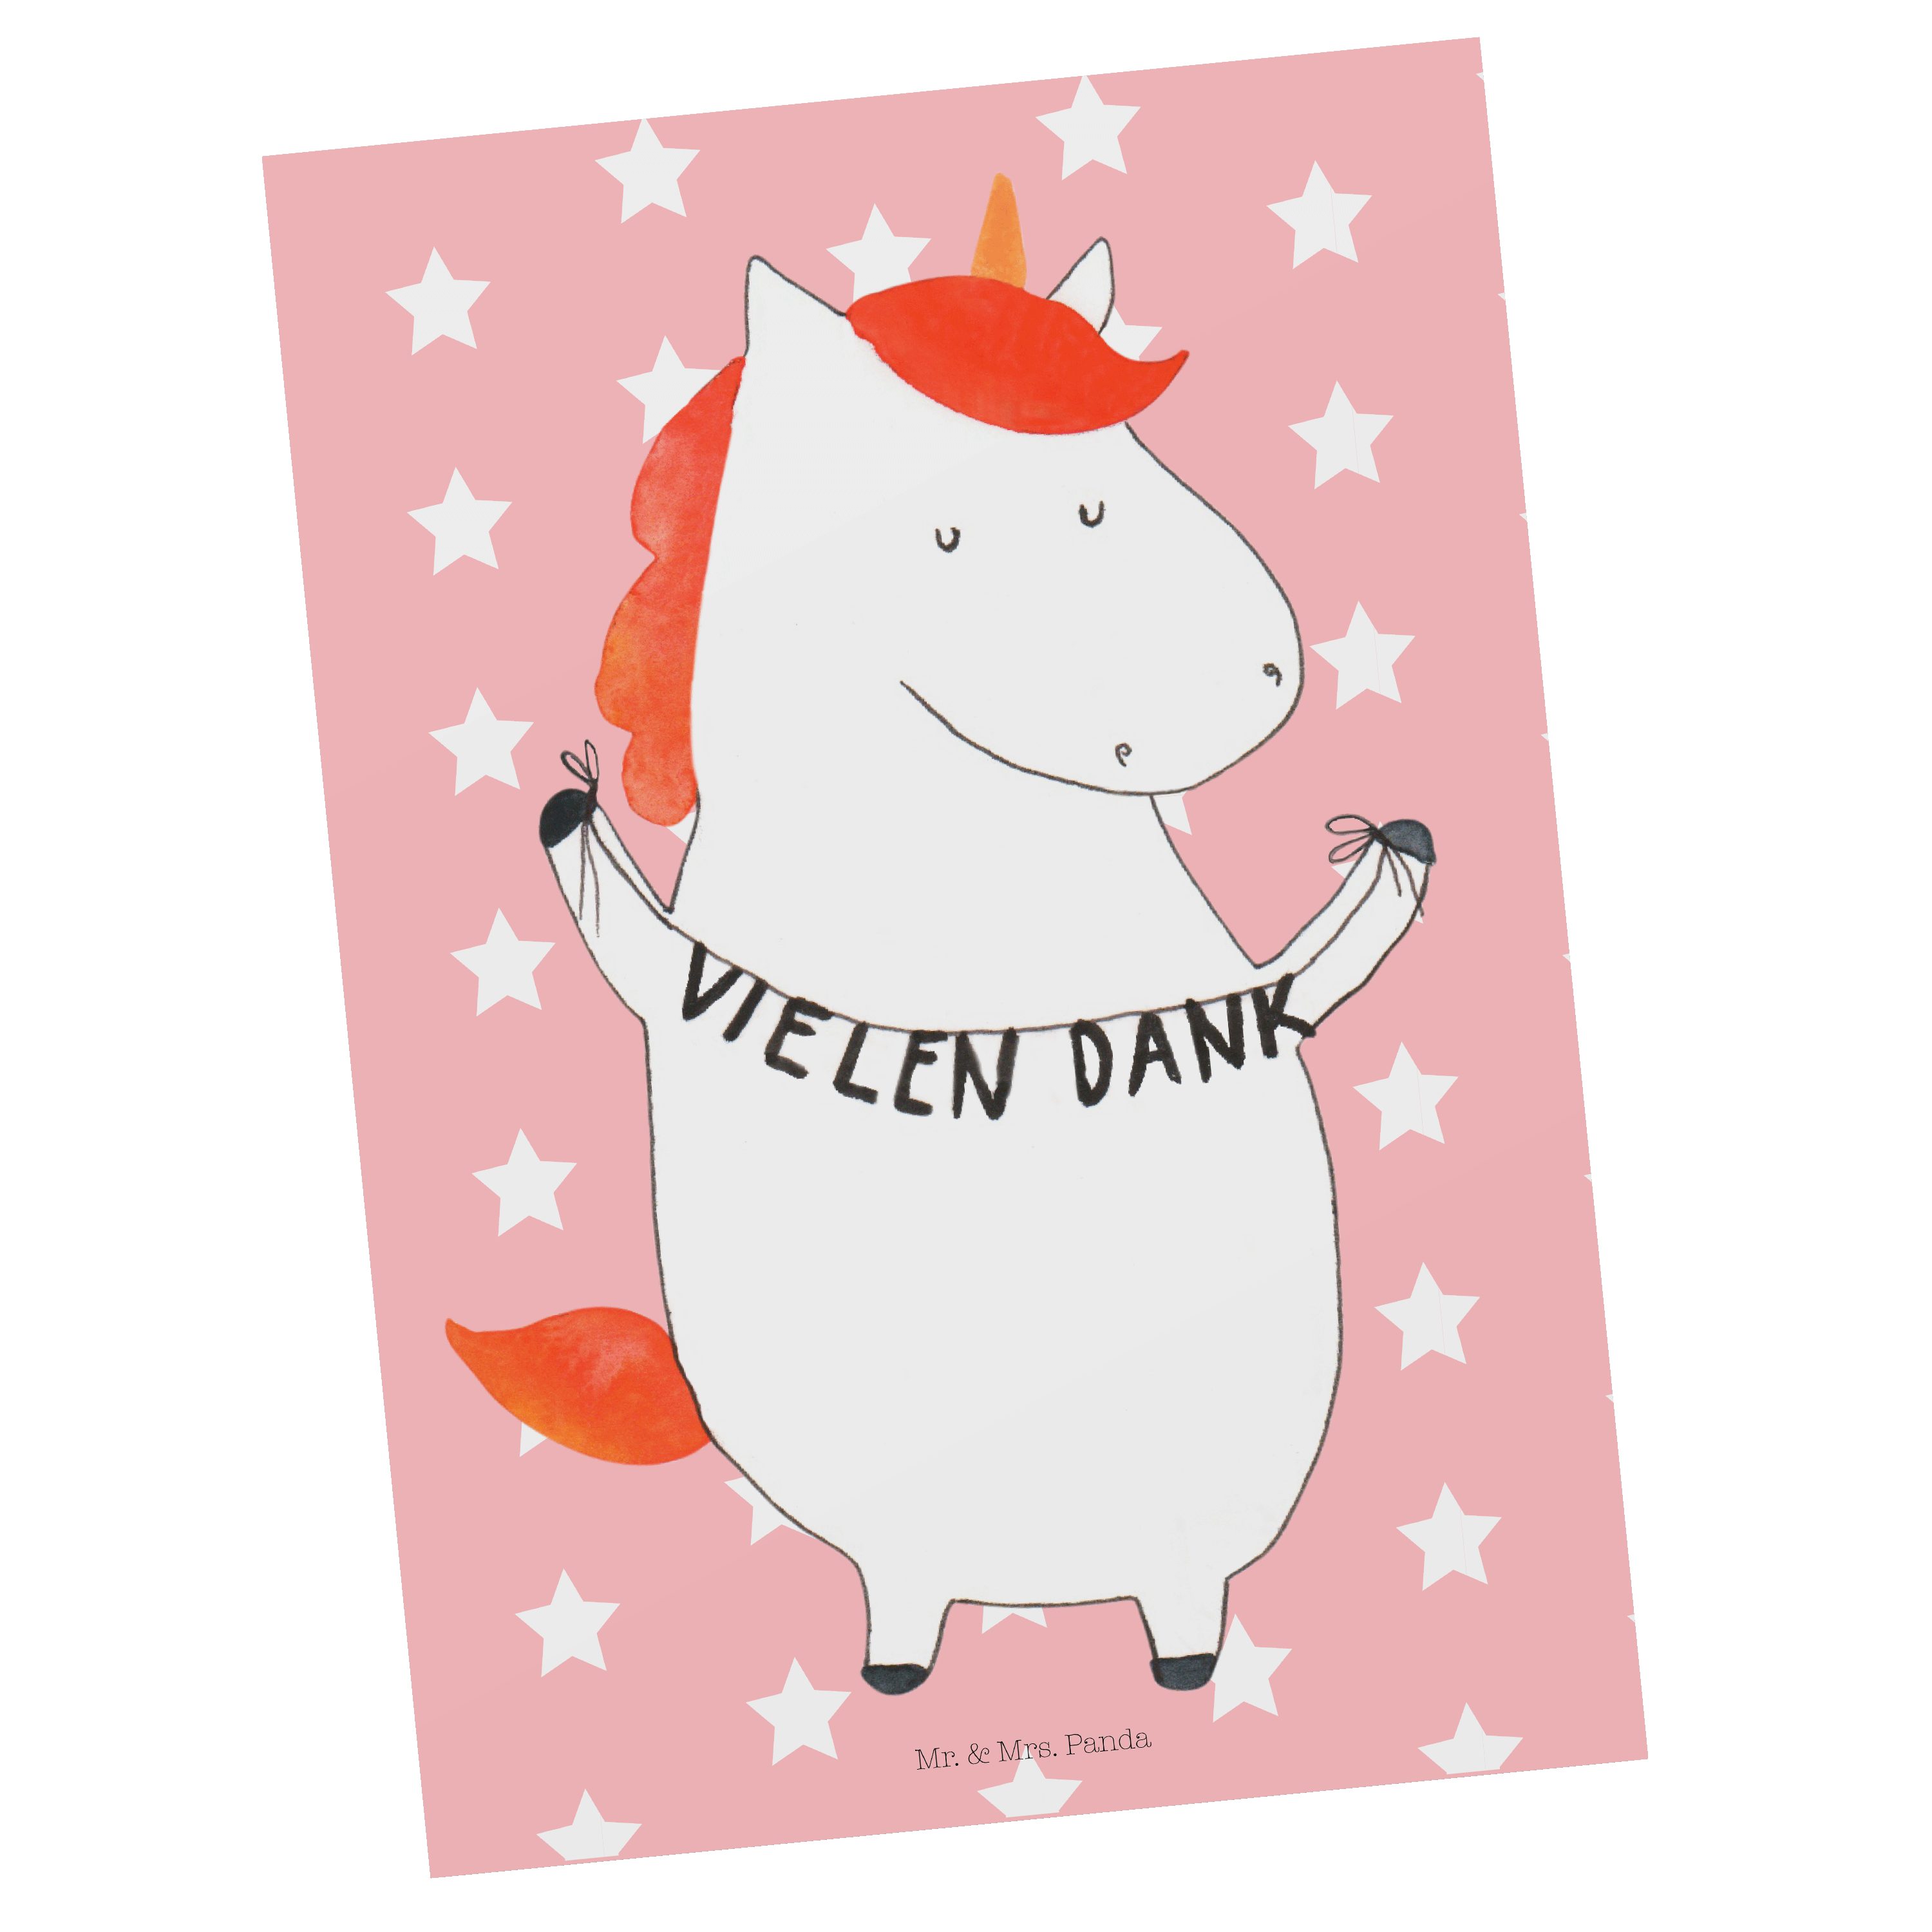 Mr. & Mrs. Panda Postkarte Einhorn Vielen Dank - Rot Pastell - Geschenk, Geburtstagskarte, Karte